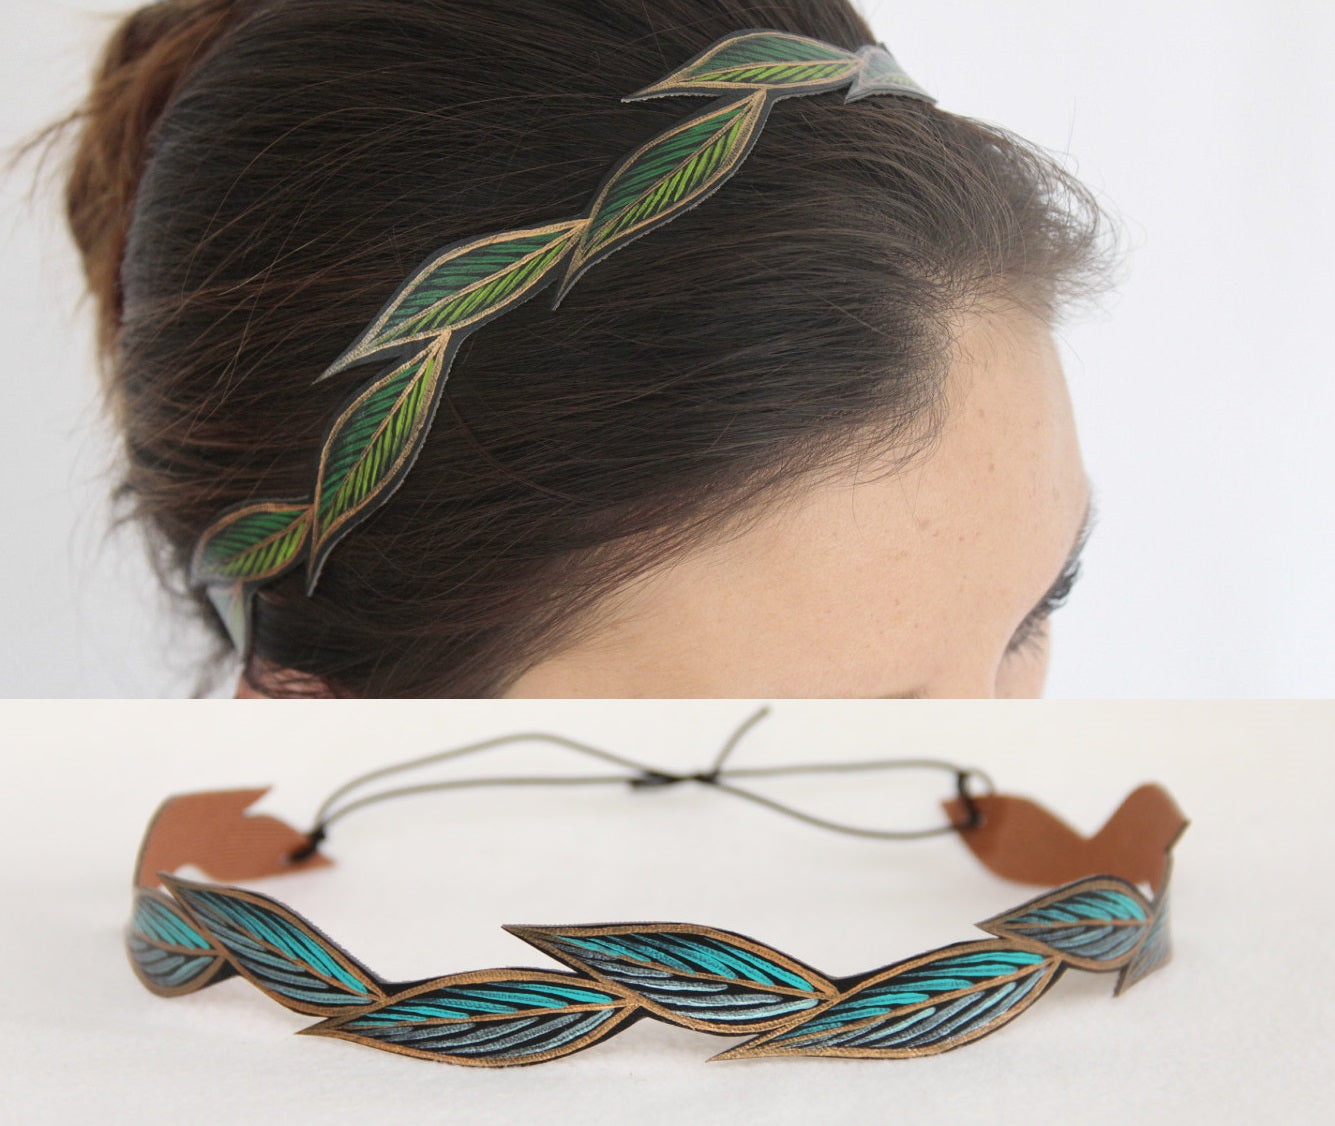 Hairband / headband - various colors